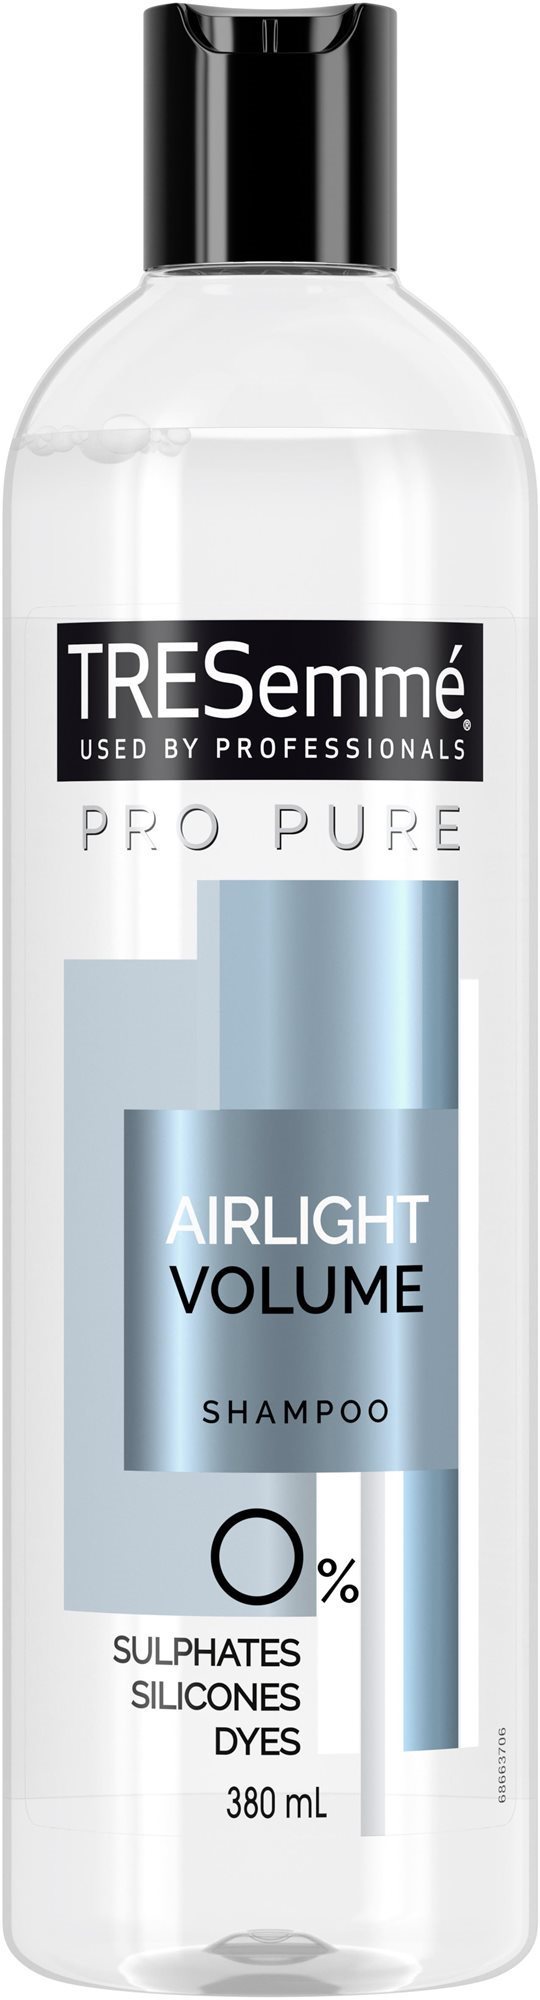 TRESEMMÉ Pro Pure Airlight Volume sampon volumen nélküli hajra 380 ml